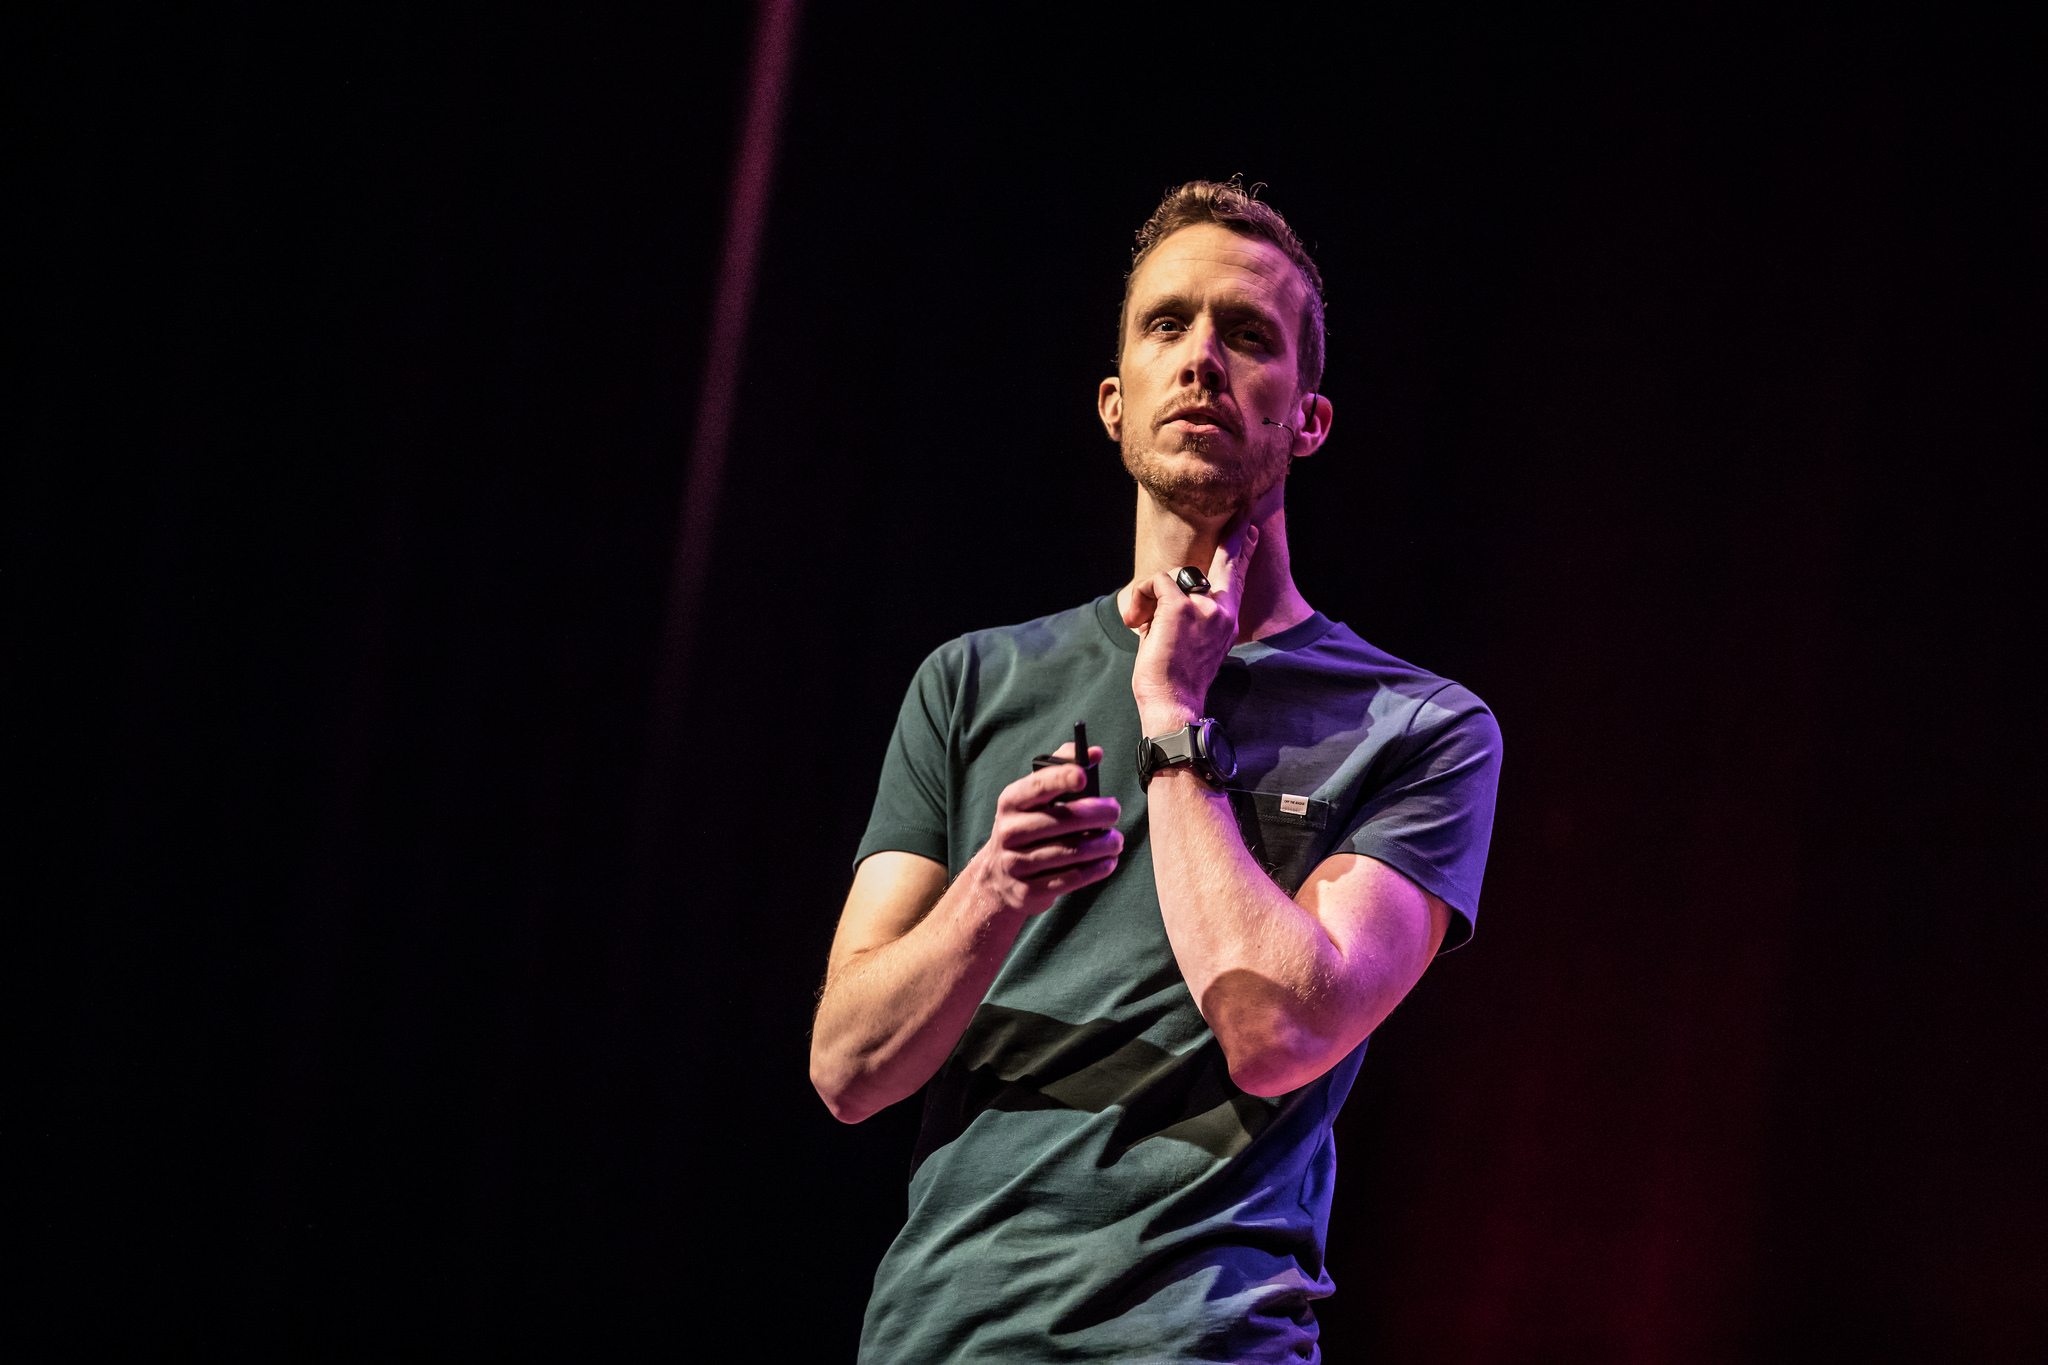 TEDx spreker? Overzicht Nederland, mijn ervaring & 3 tips